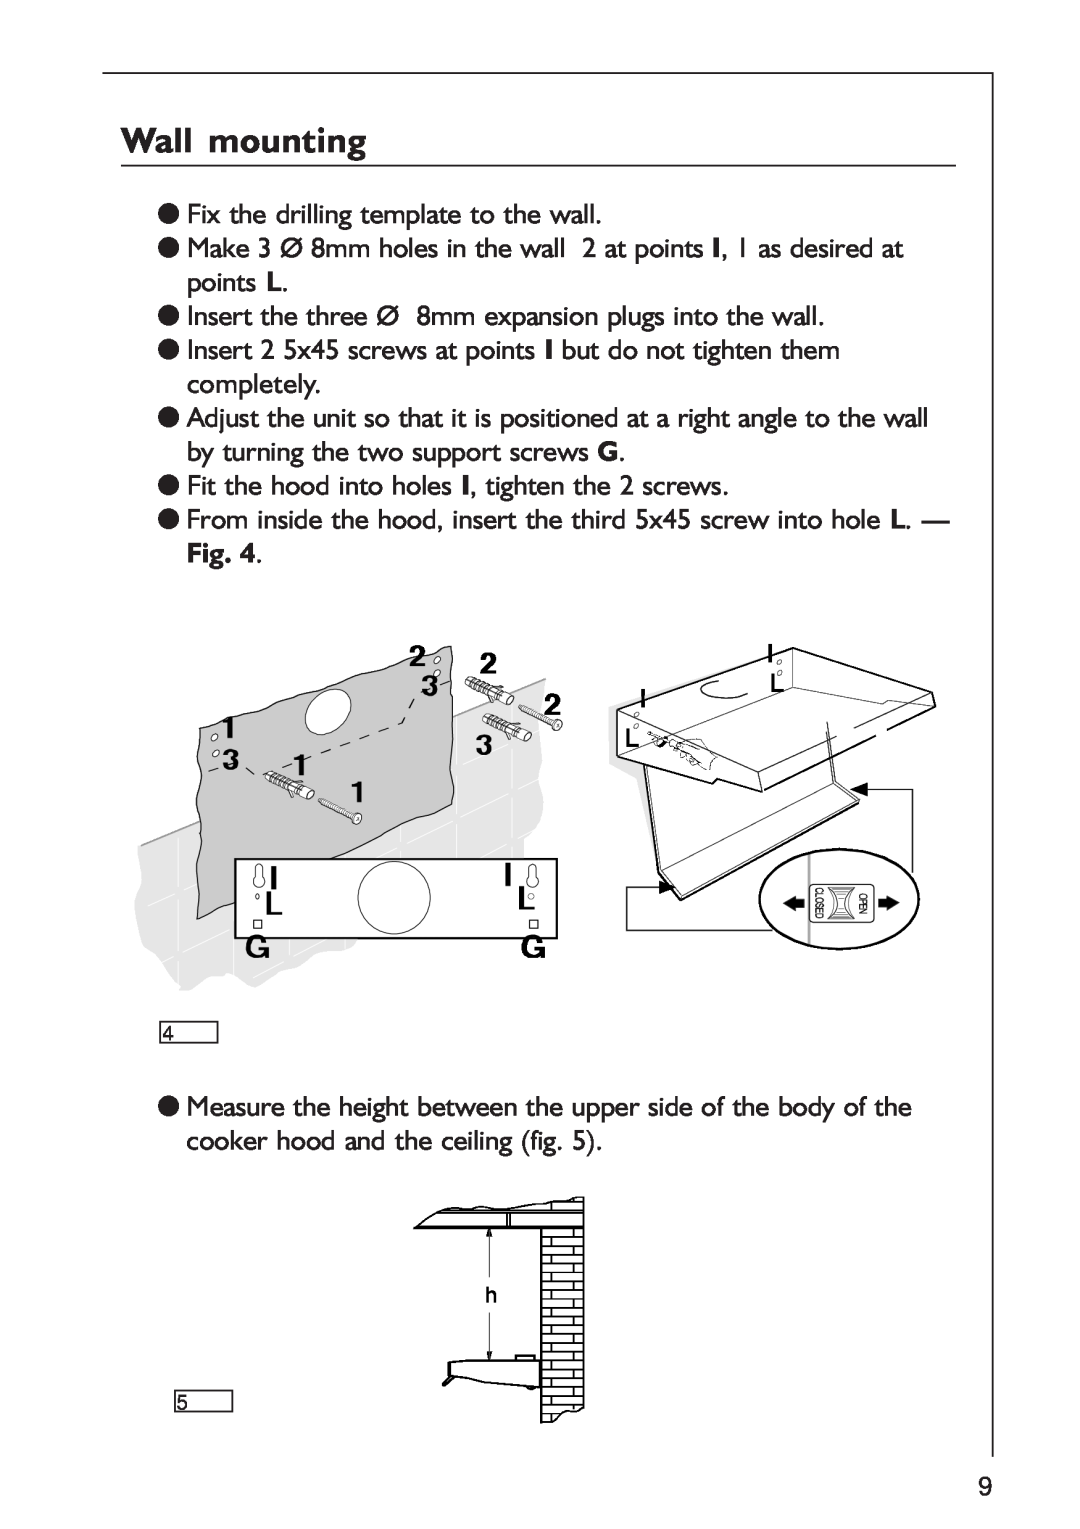 AEG 125 D manual Wall mounting 